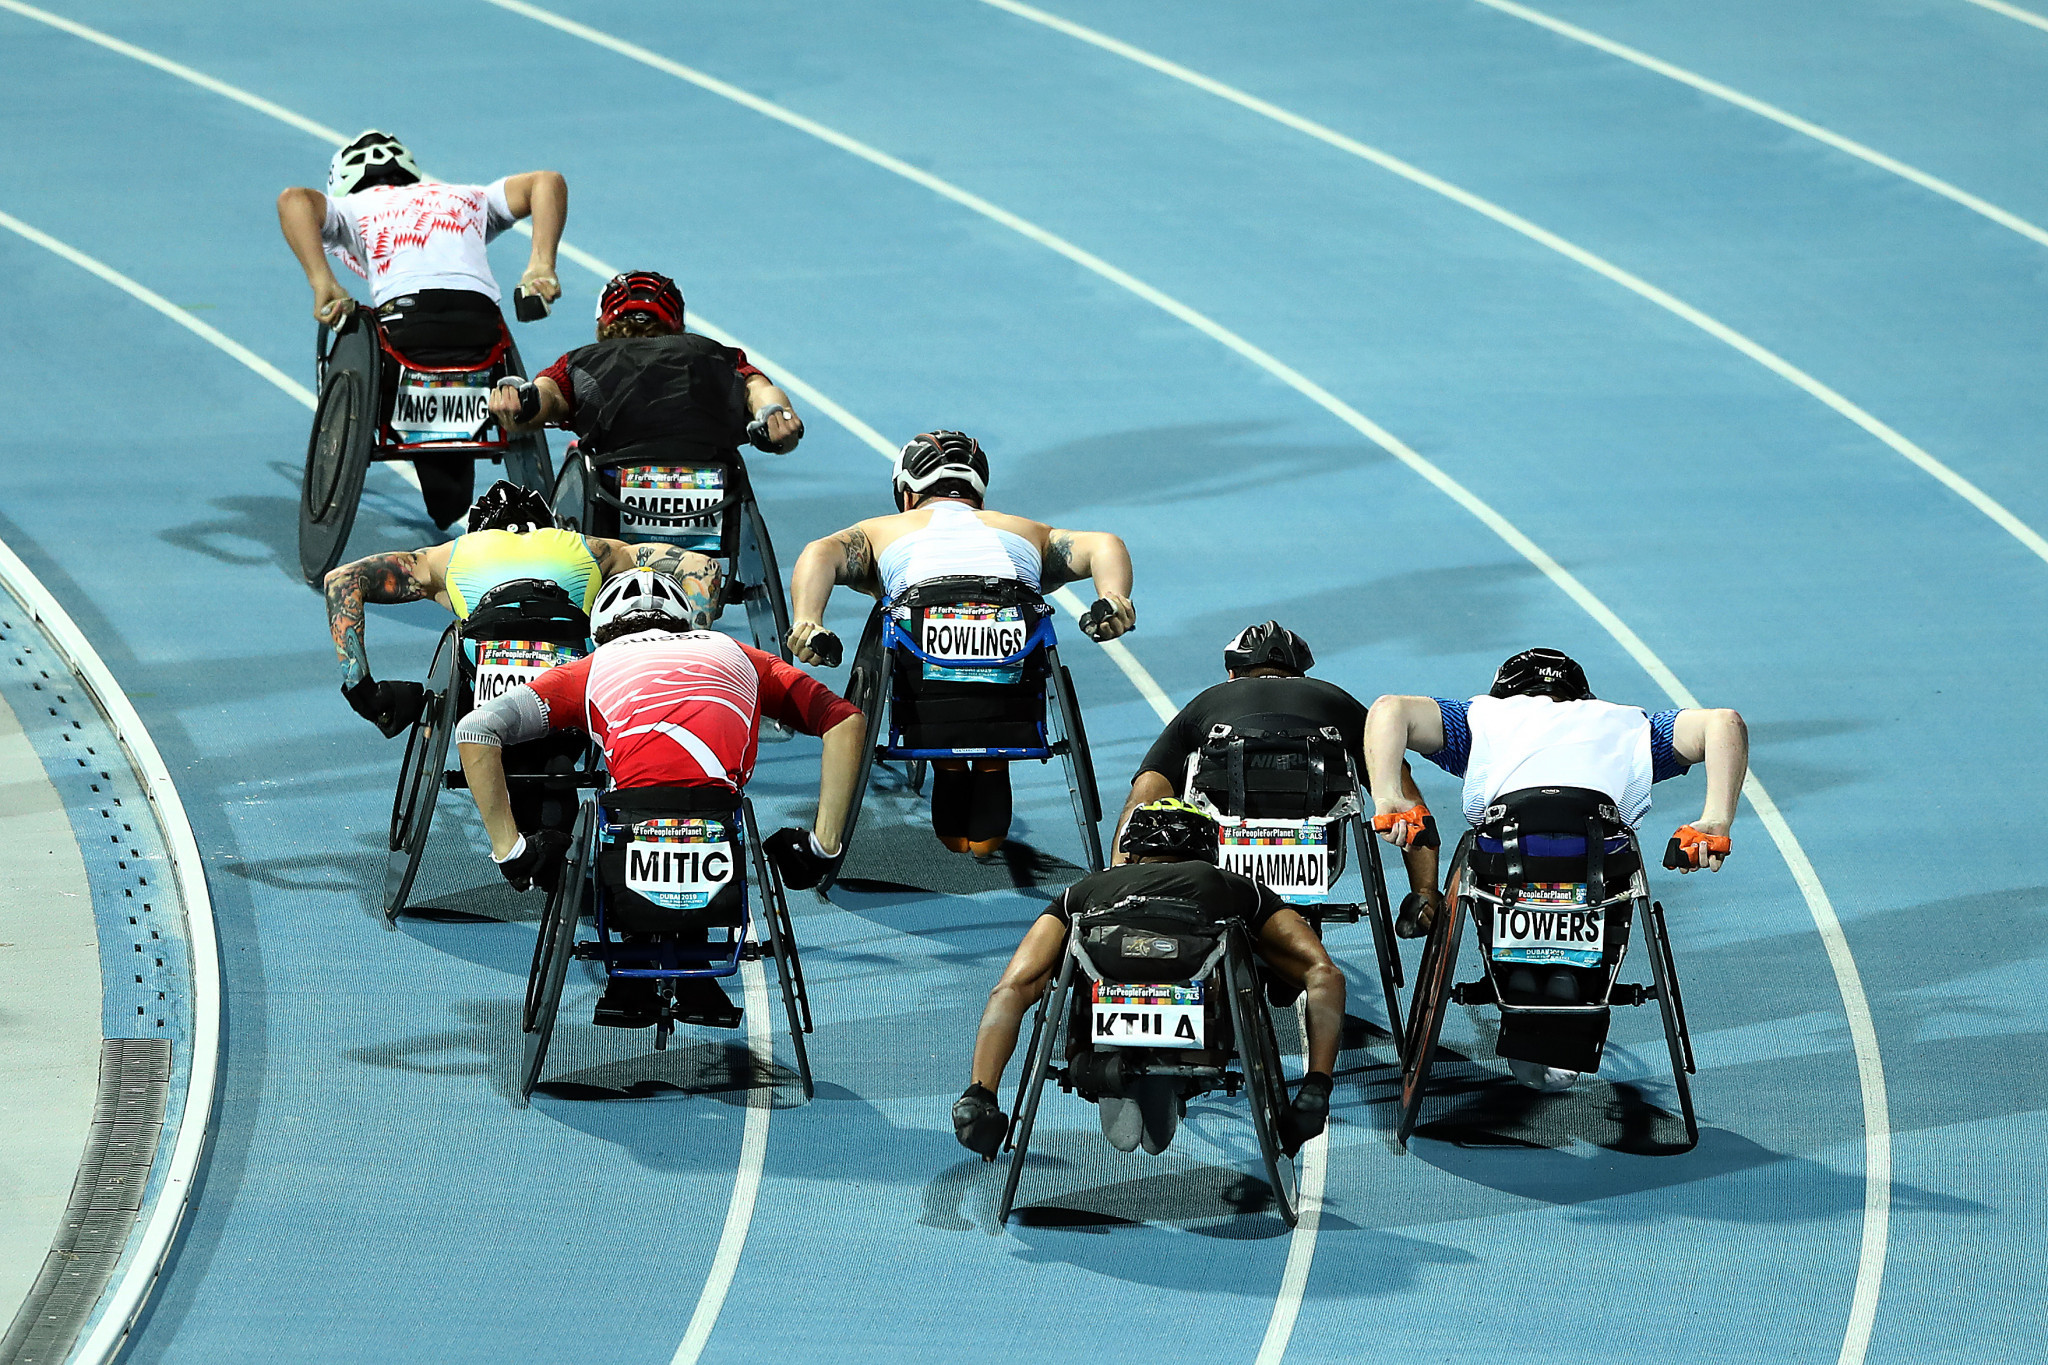 World Para Athletics open bid process for 2023 and 2025 World Championships